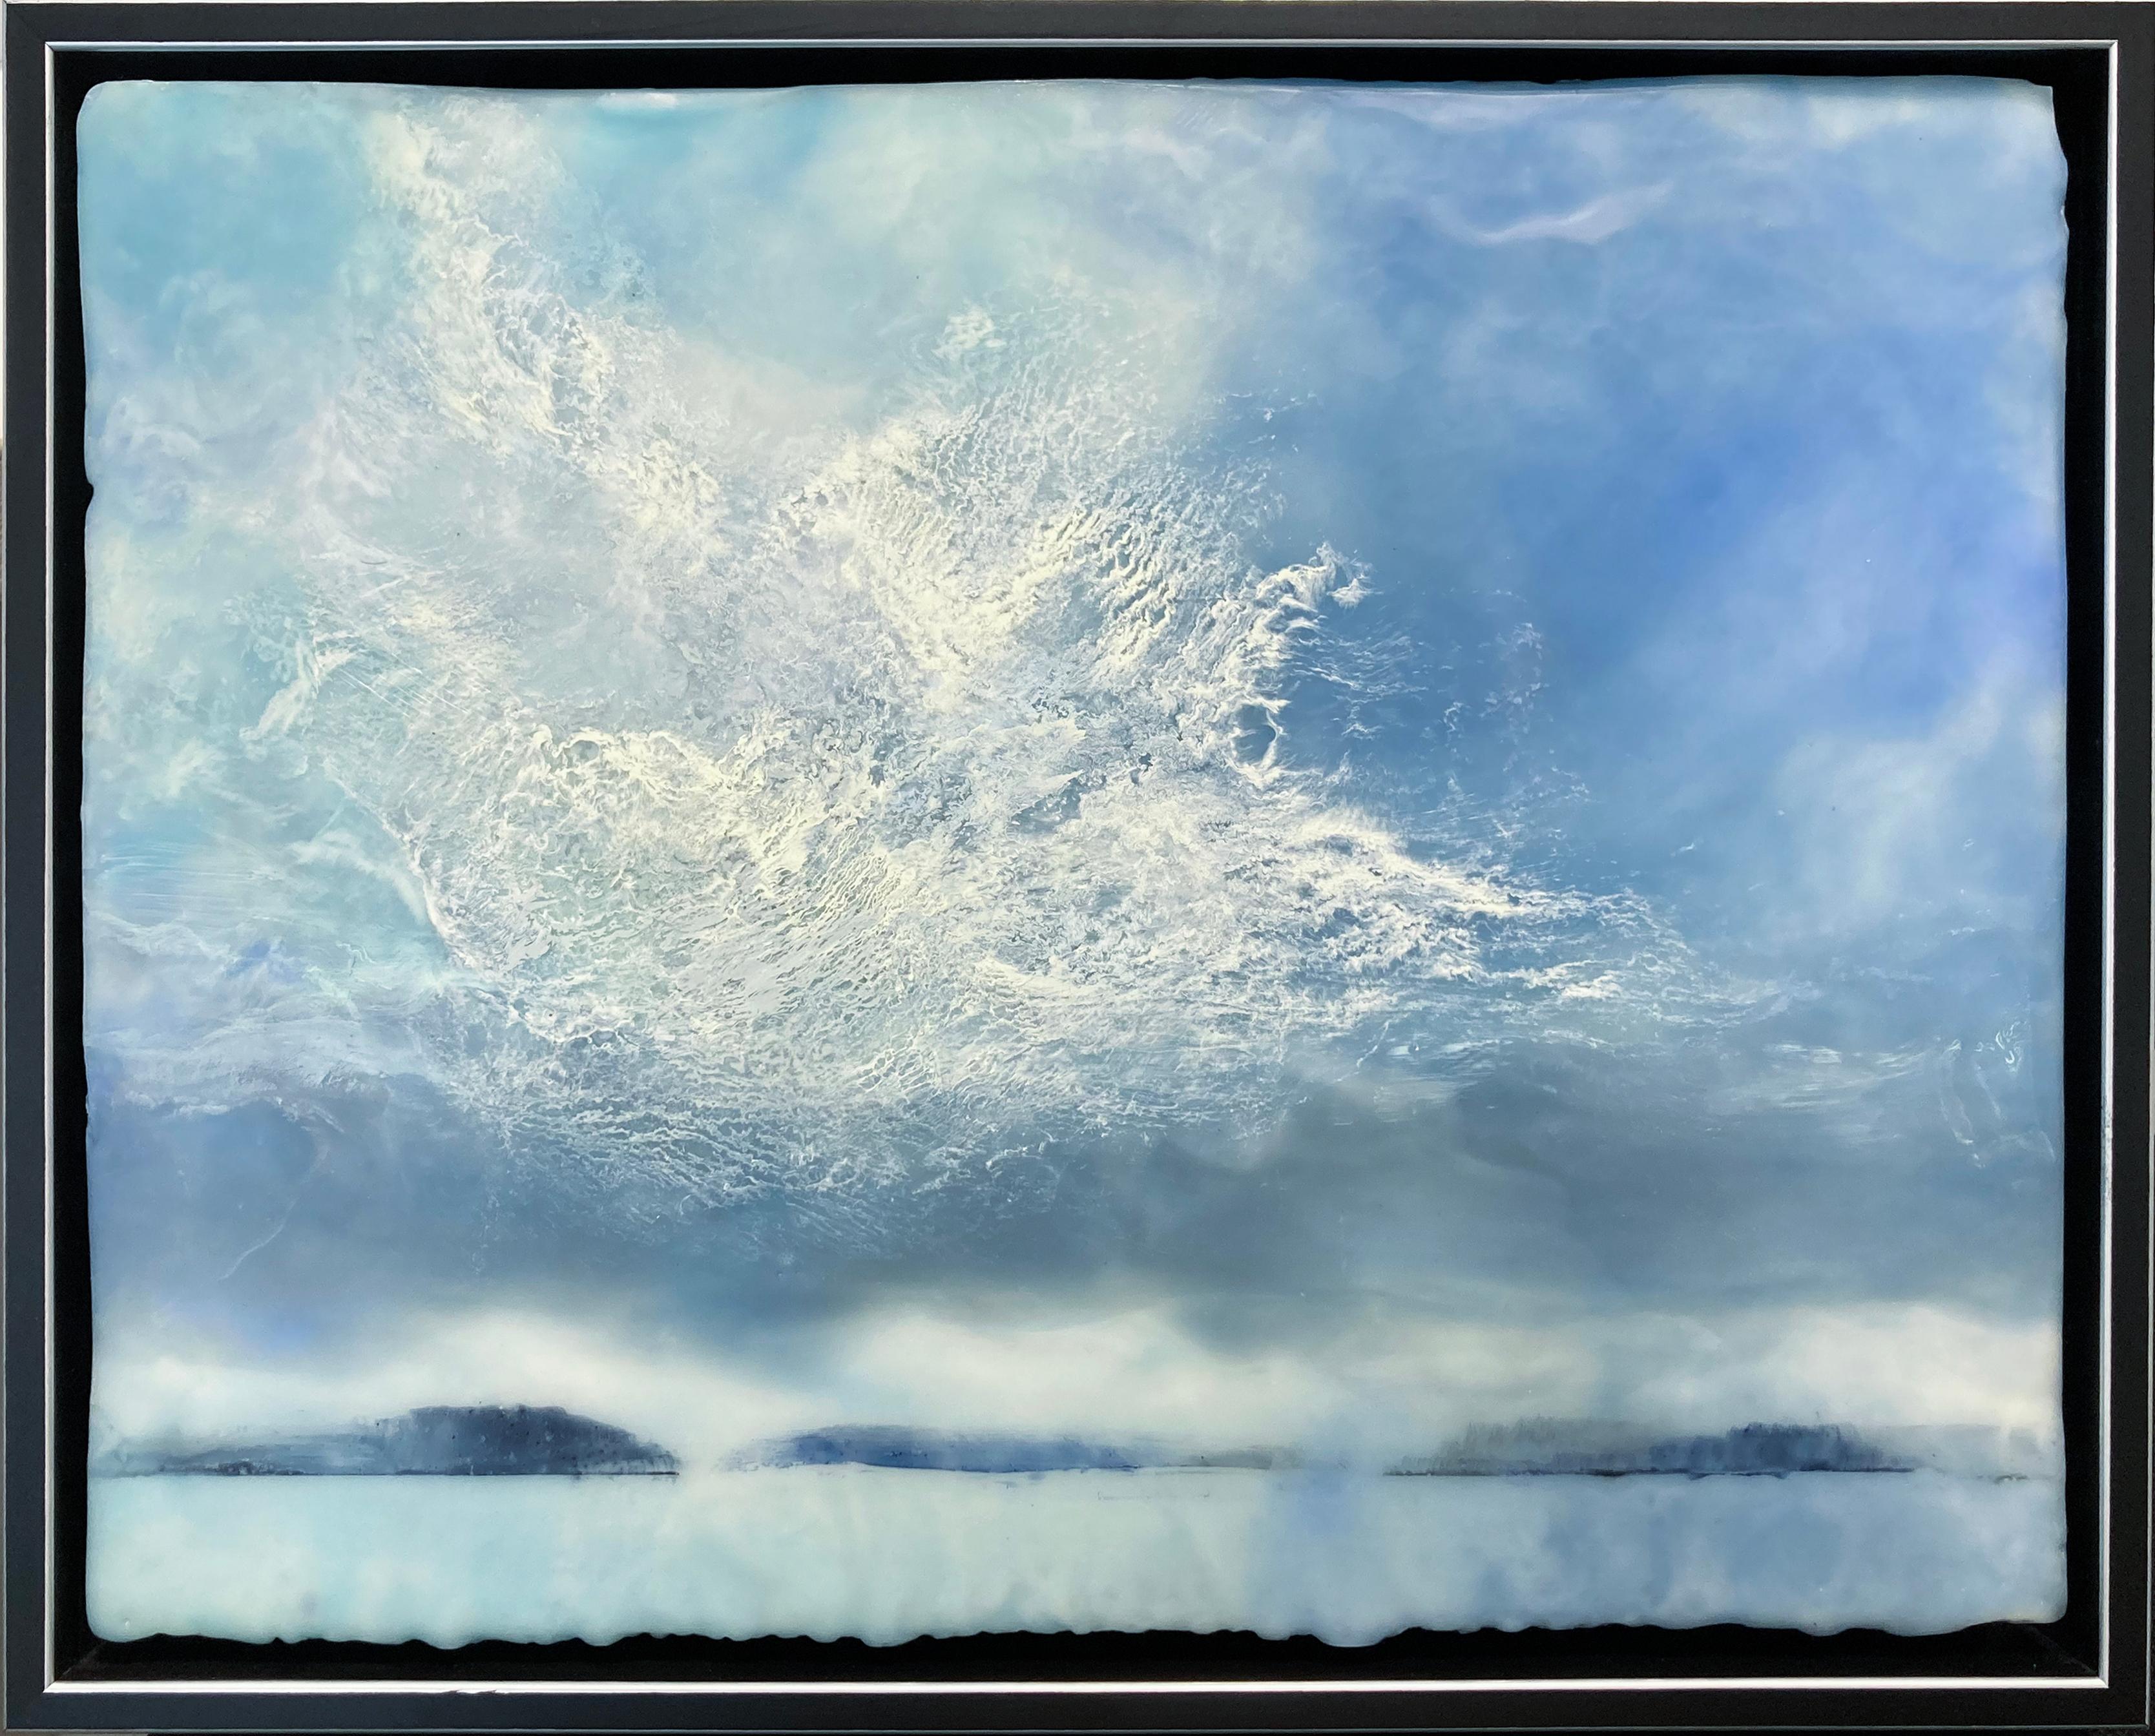 Sky d'hiver (peinture de paysage à l'encaustique de style impressionniste représentant un ciel bleu) - Mixed Media Art de Regina Quinn 